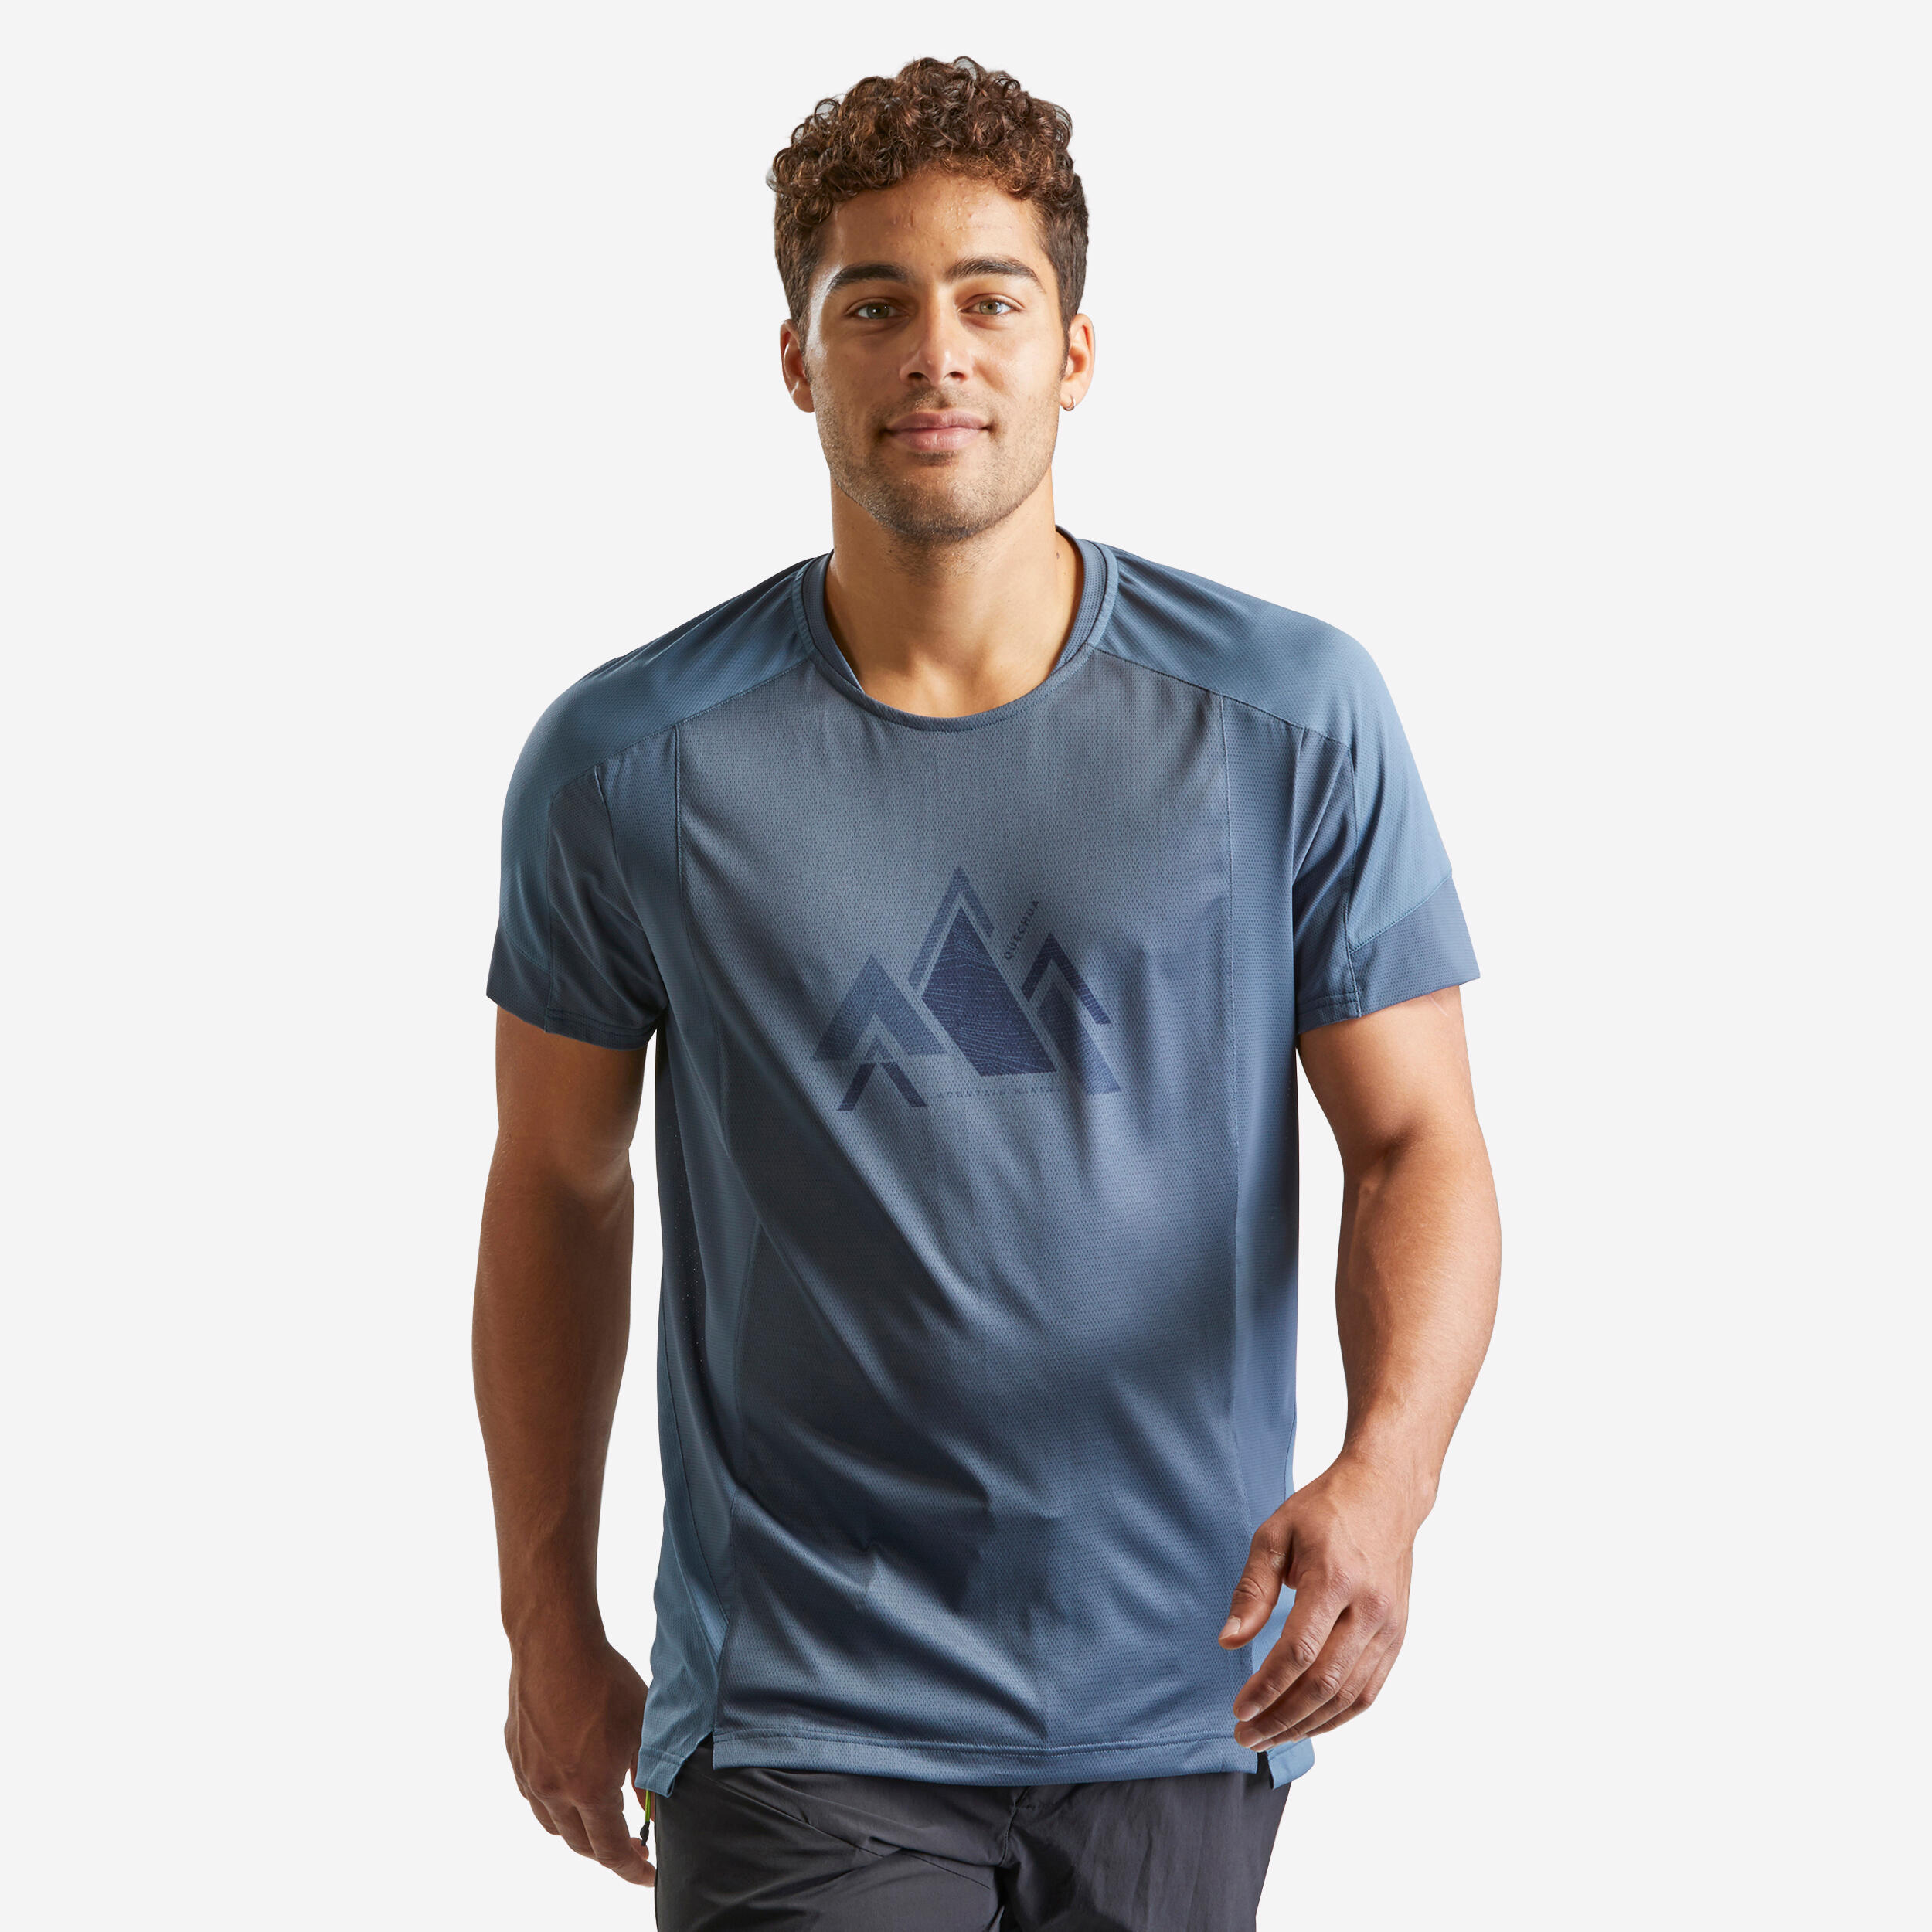 Men’s Hiking T-Shirt - MH 500 Grey